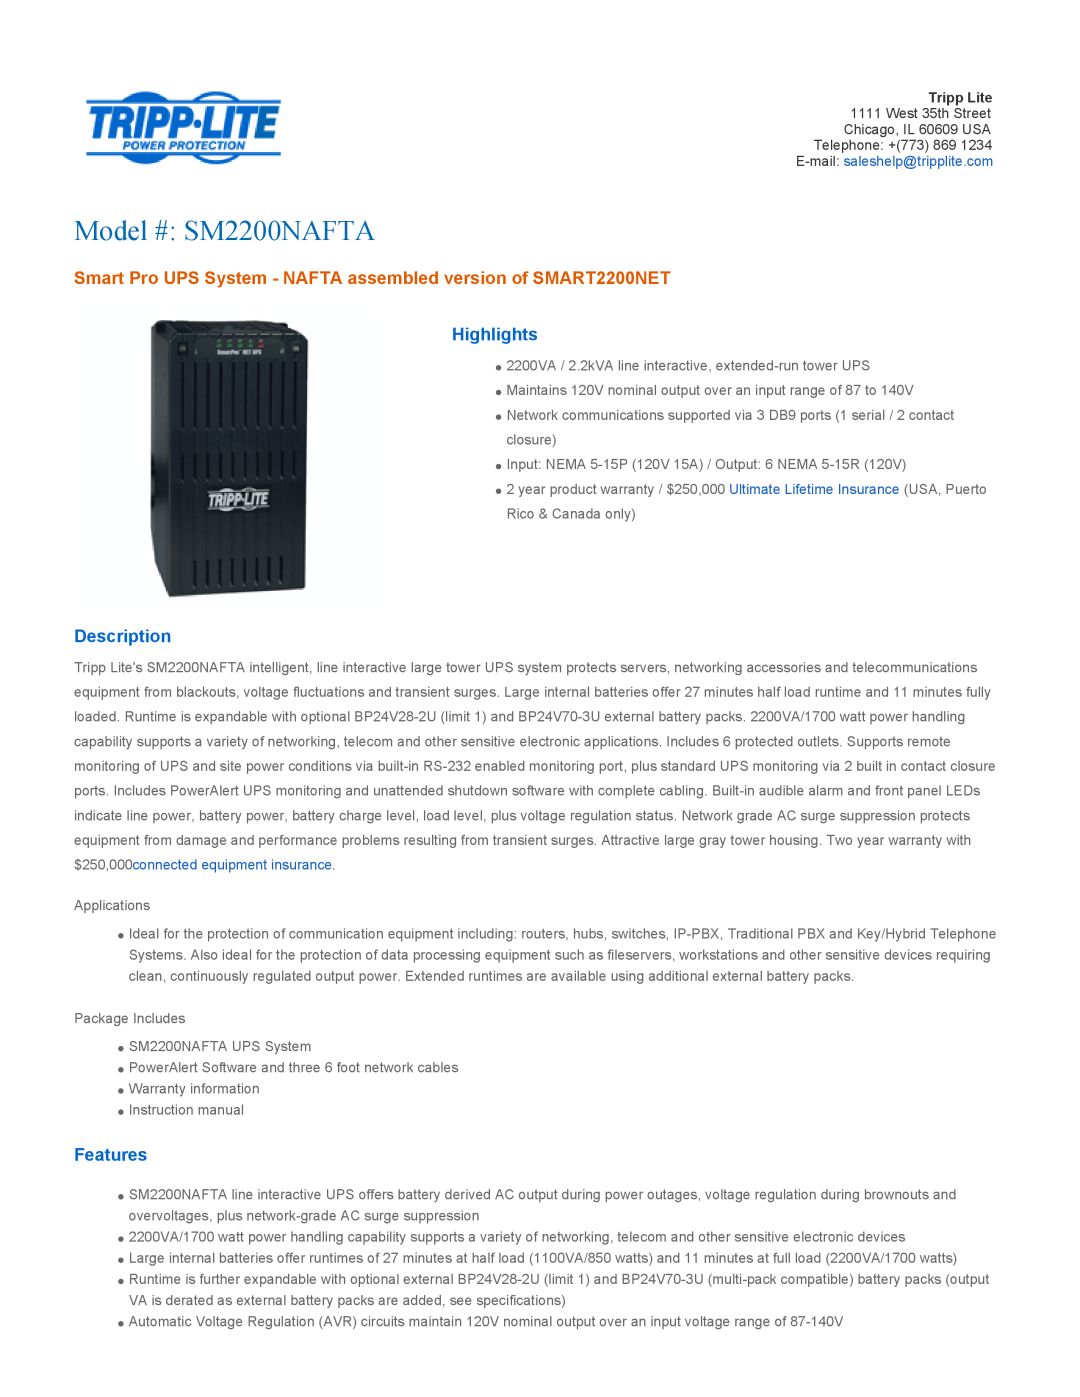 Tripp Lite warranty Highlights, Description, Features, Model # SM2200NAFTA, $250,000connected equipment insurance 